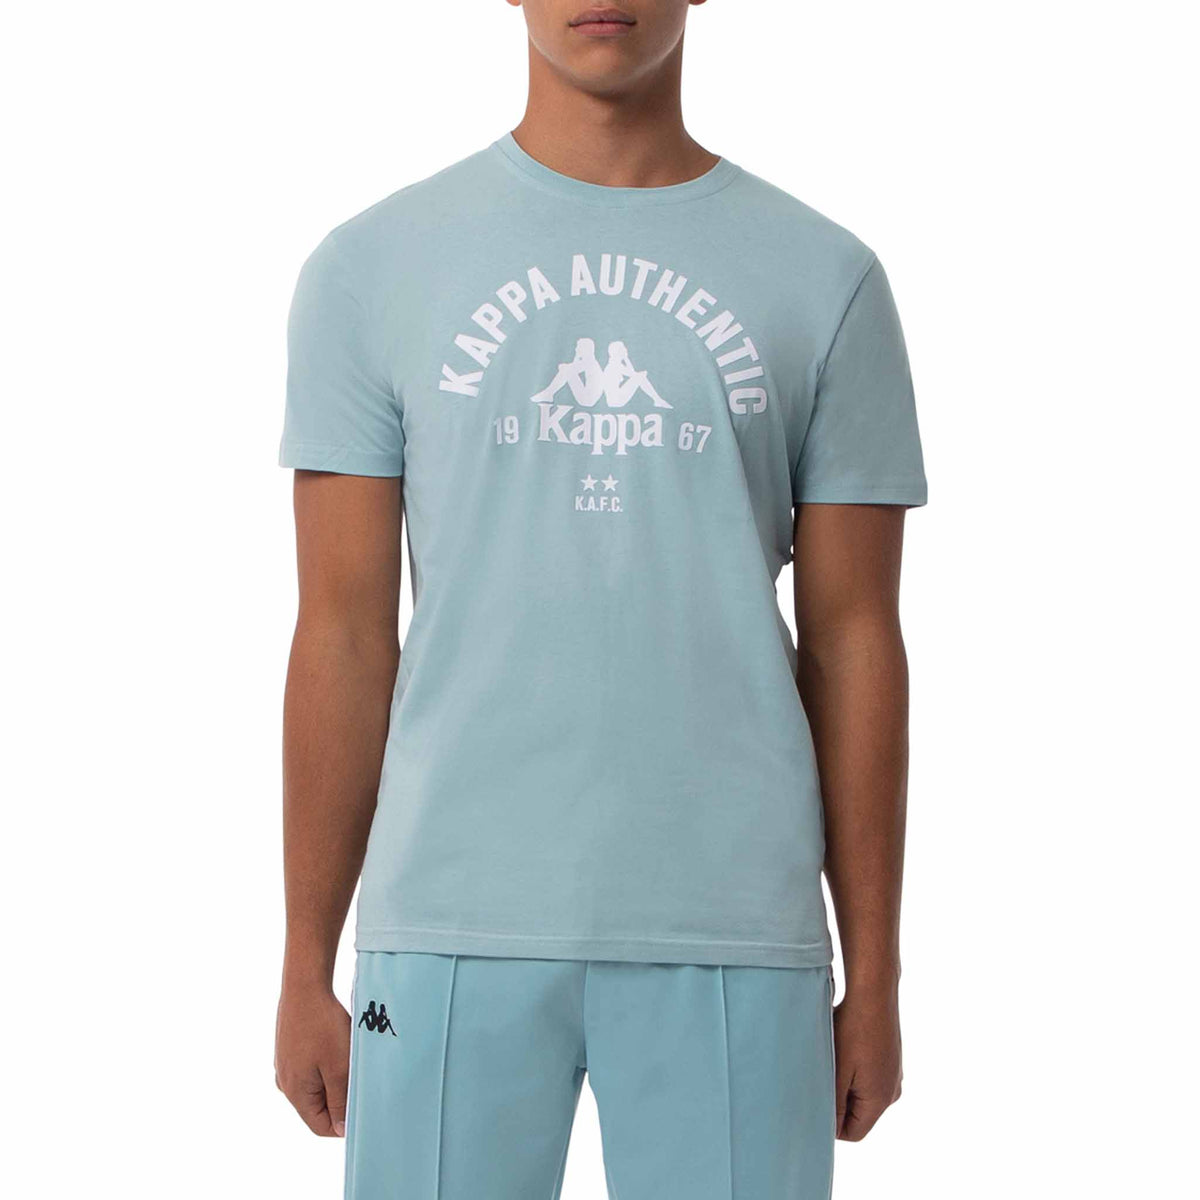 T-shirt Kappa Authentic Capurro slim pour homme Bleu/Blanc